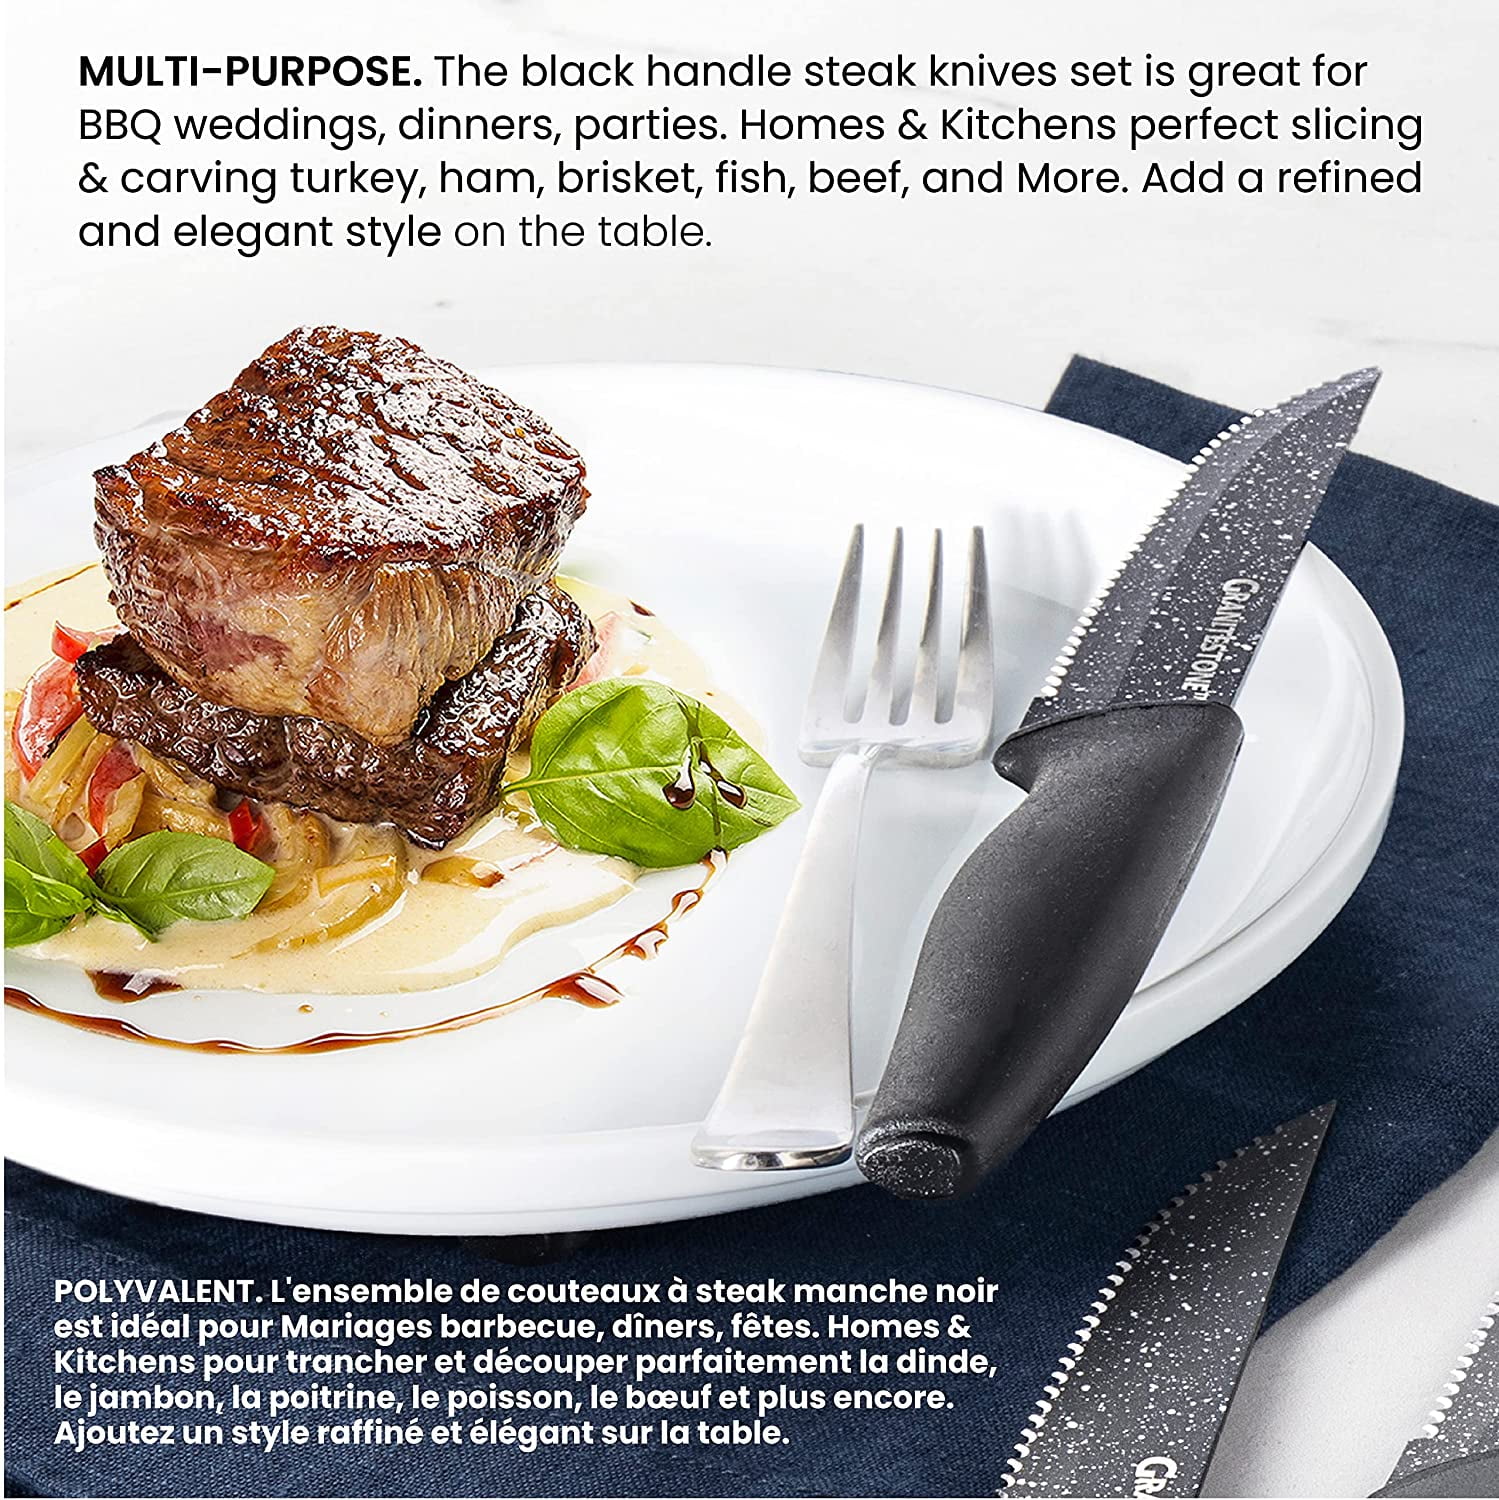 Granitestone Nutriblade 6-Piece Steak Knives with Comfortable Handles, –